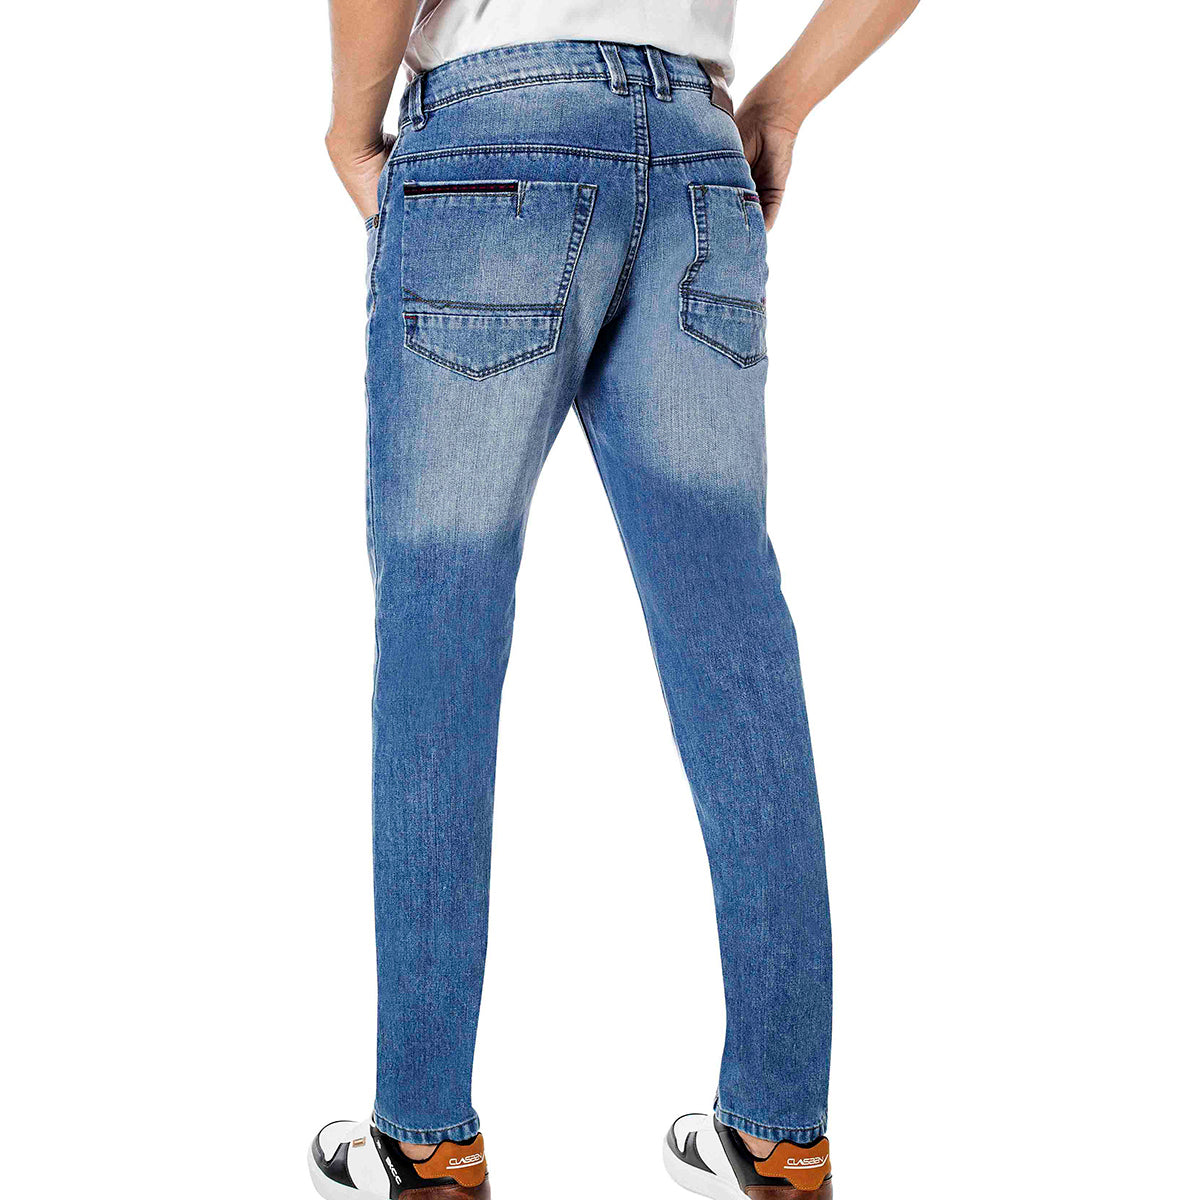 Pakar.com - Mayo: Regalos para mamá | Jeans para hombre cod-121596